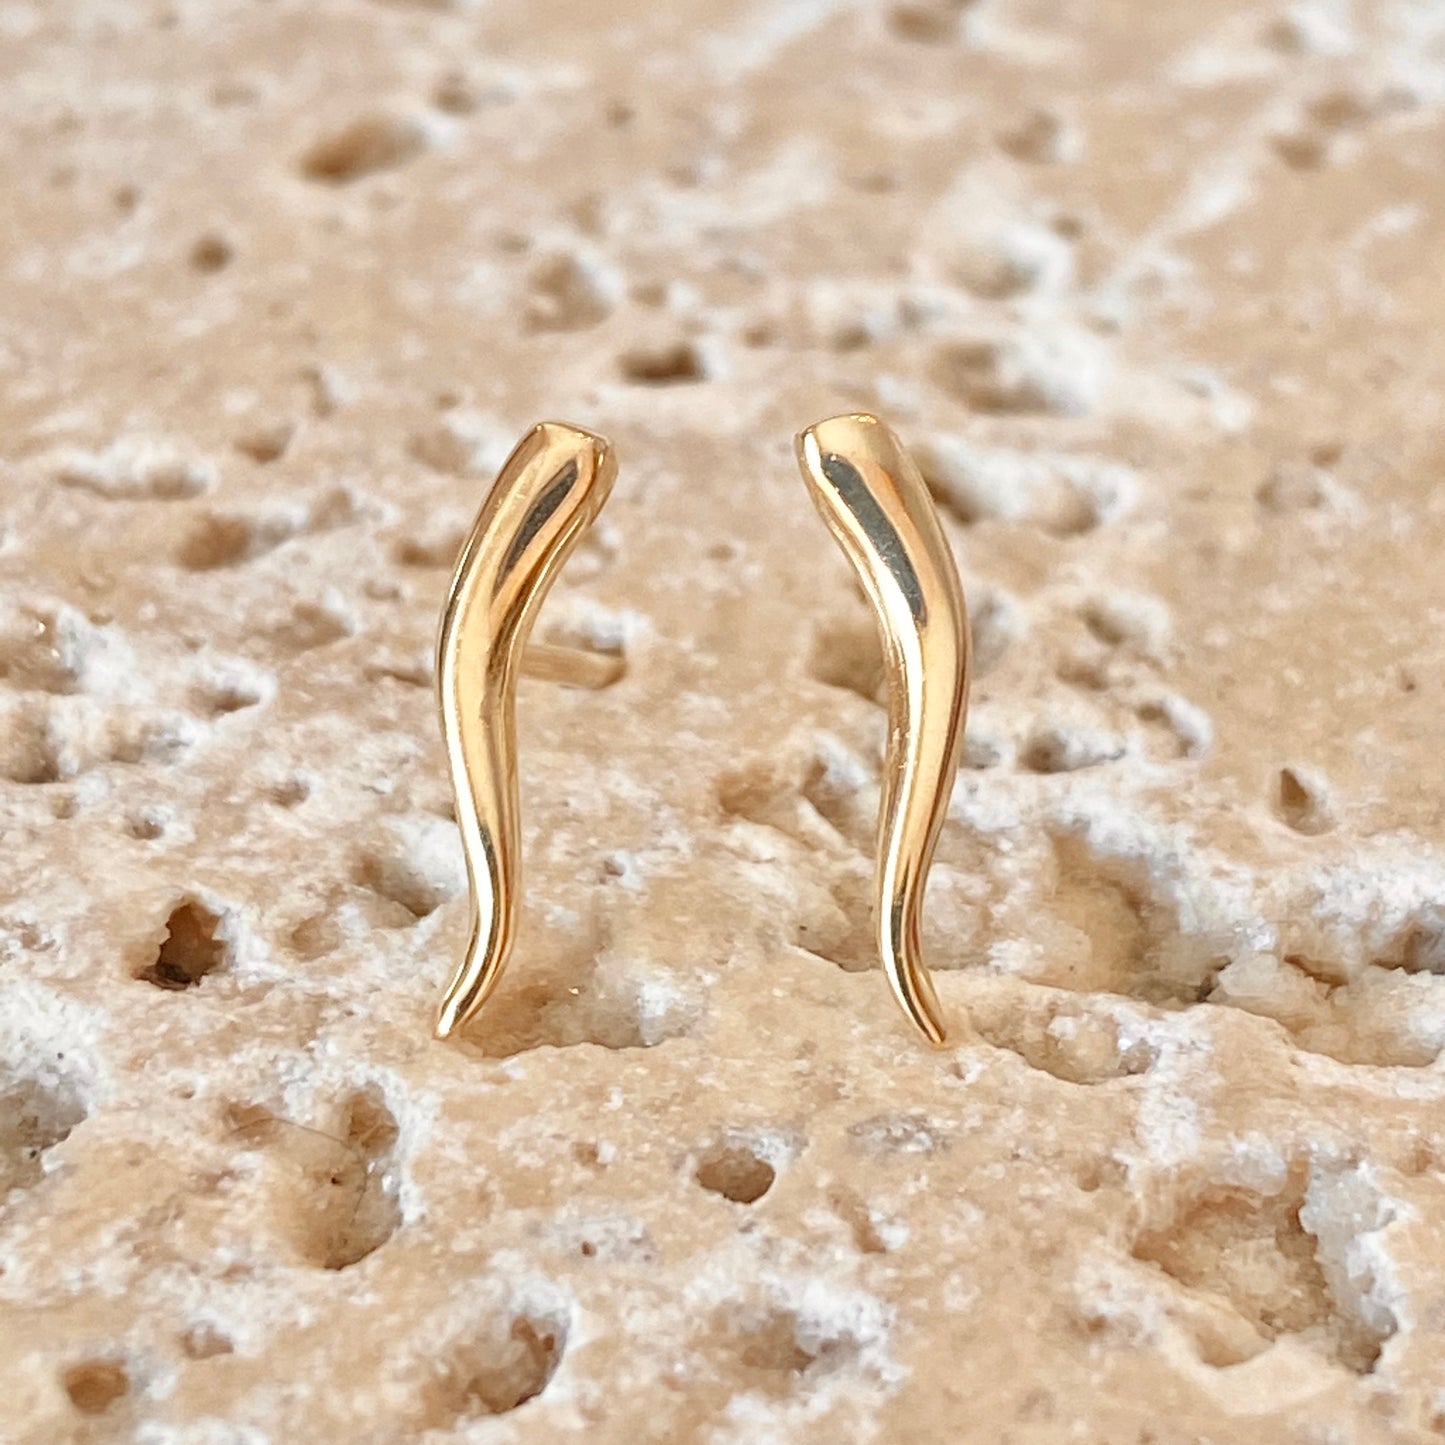 14KT Yellow Gold "Cornicello" Italian Horn Stud Earrings, 14KT Yellow Gold "Cornicello" Italian Horn Stud Earrings - Legacy Saint Jewelry